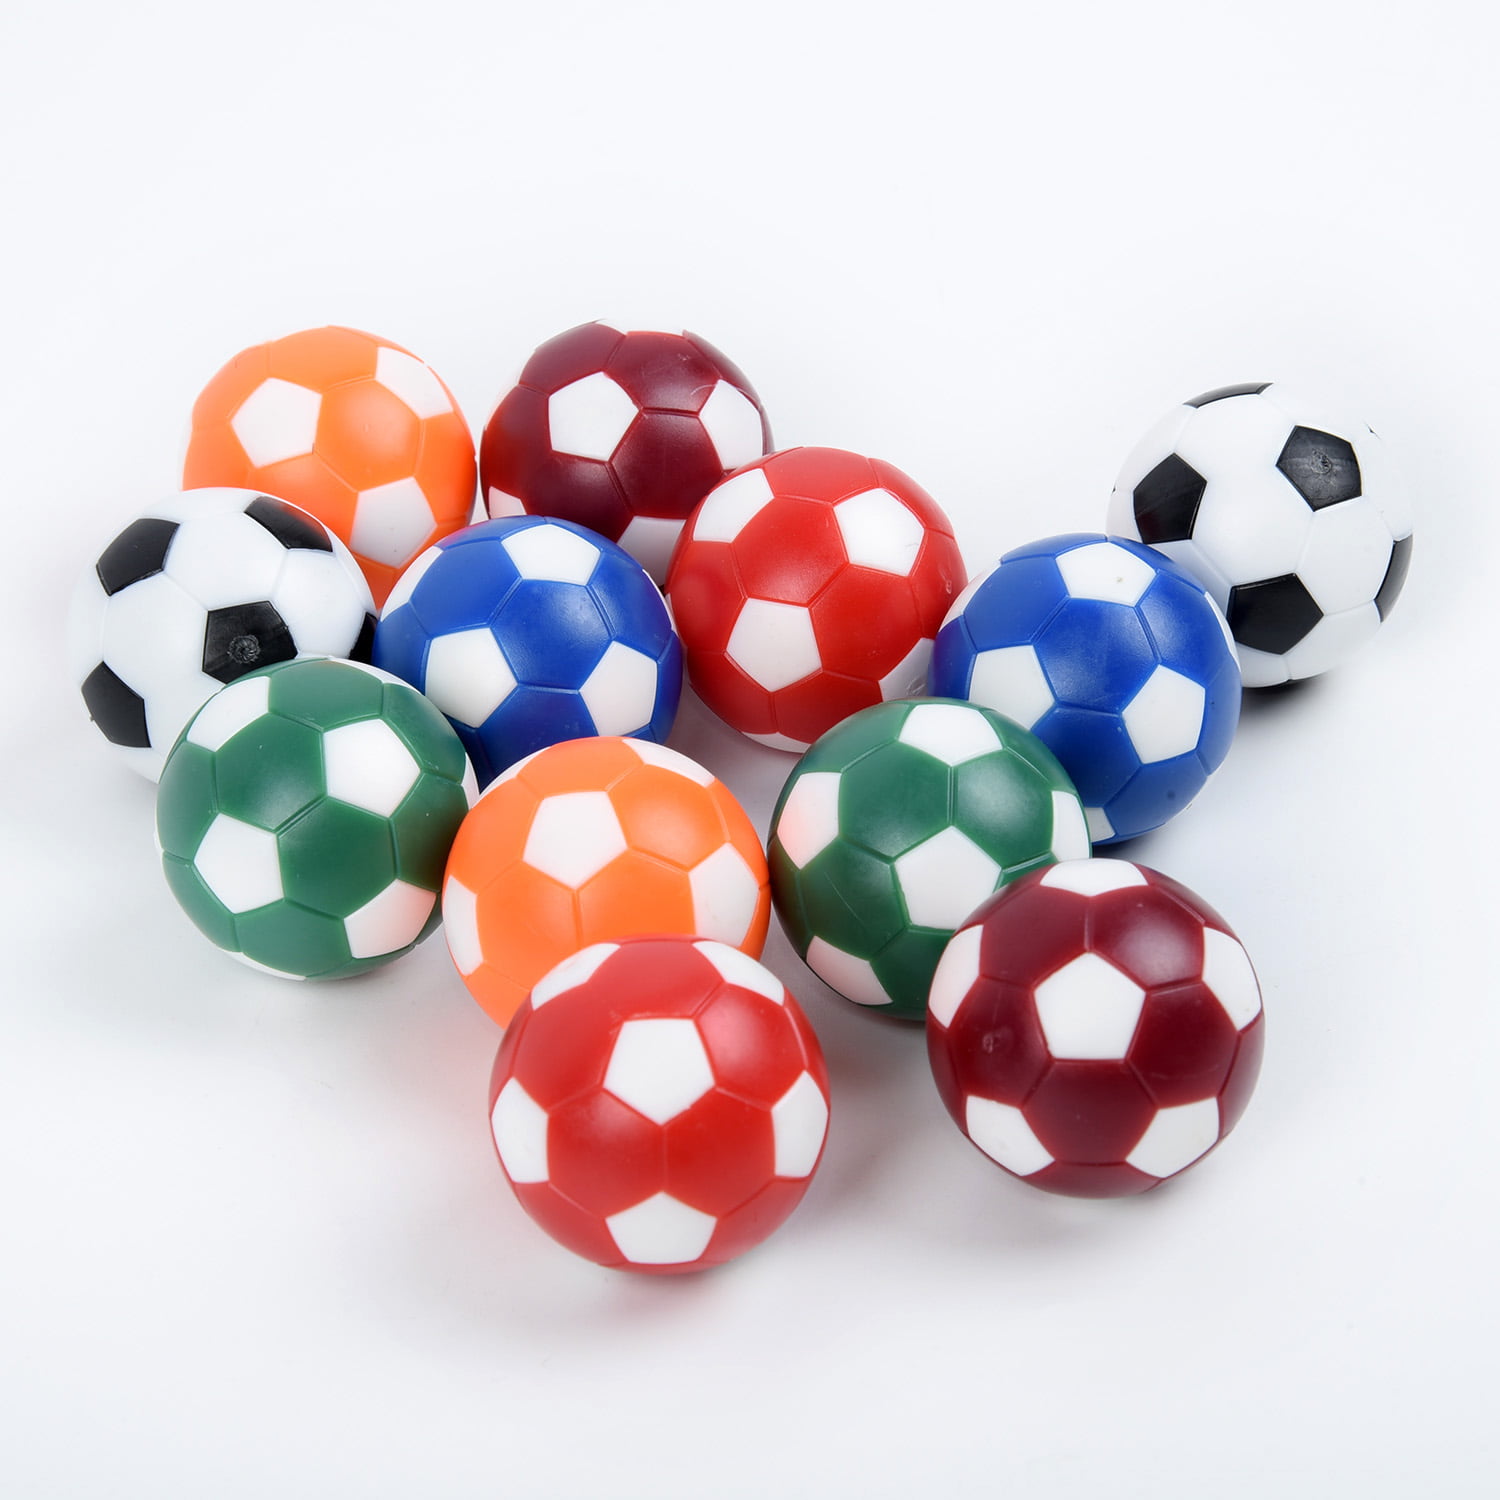 6x Mini Foosball Table Soccer 32mm ABS Indoor Games Kicker Ball Spare Balls New 